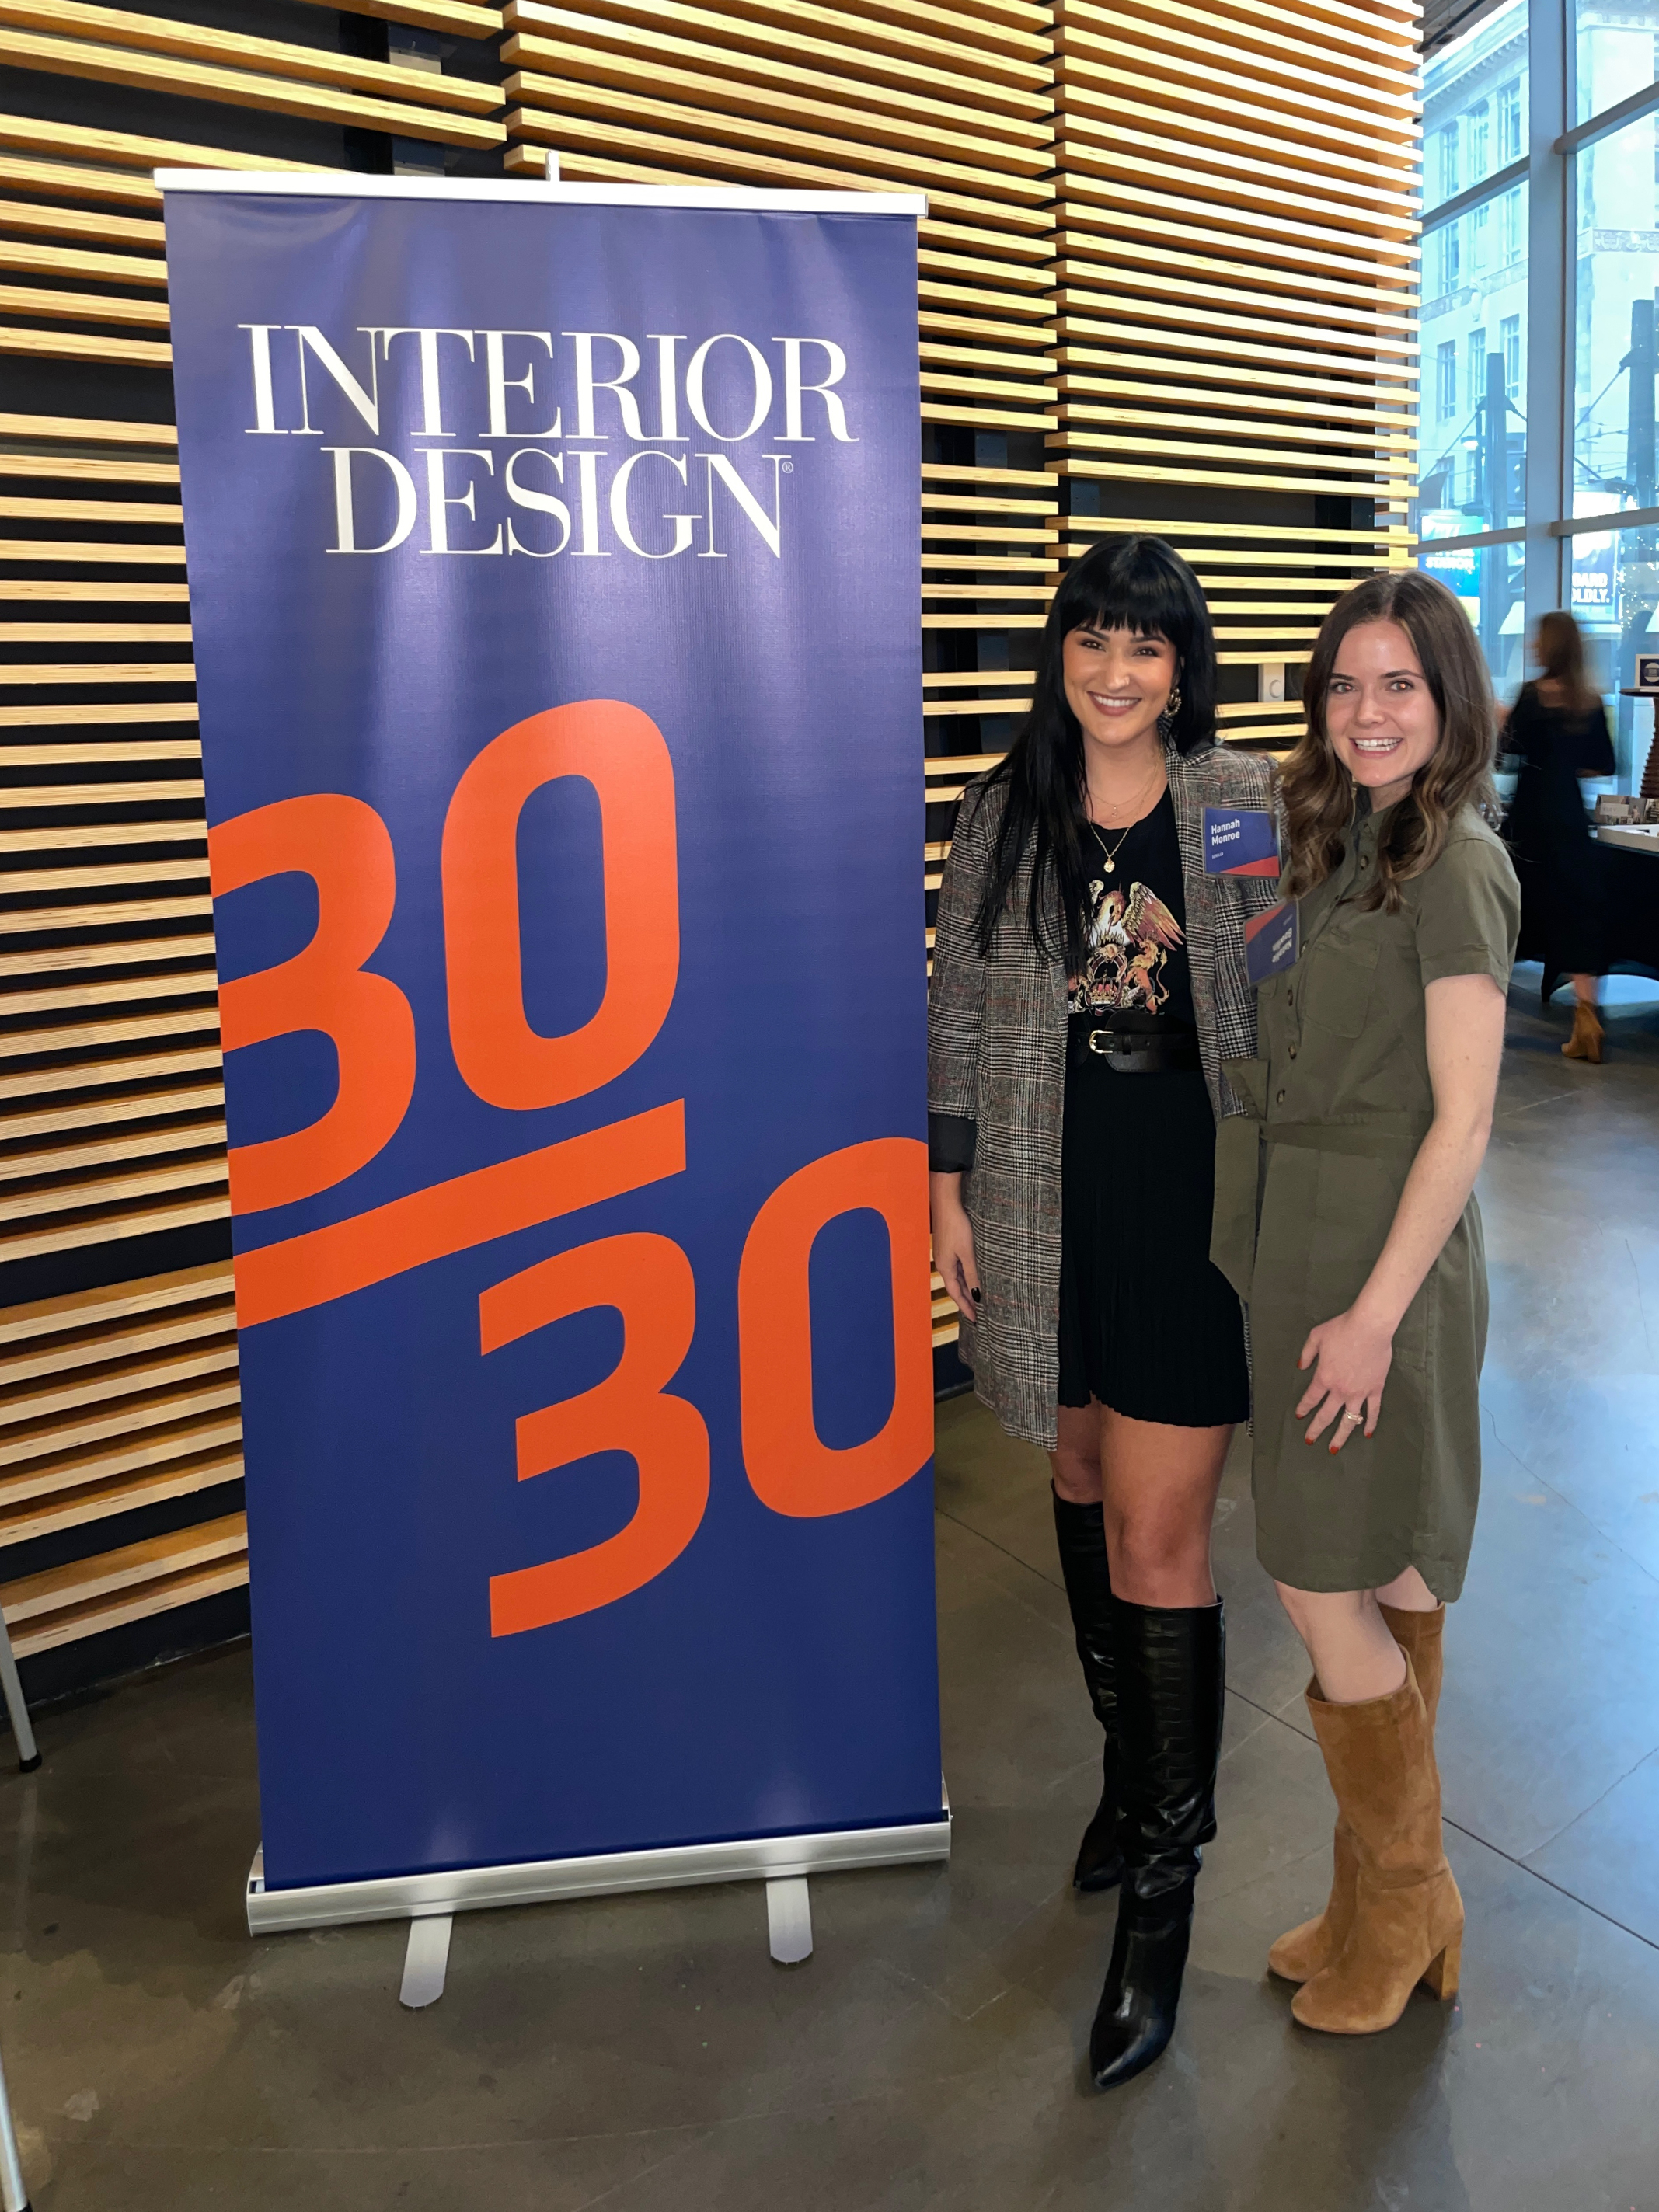 Hannah Monroe, left, stands with Natalie Bowlin next to Interior Design Magazine's 30/30 Program sign